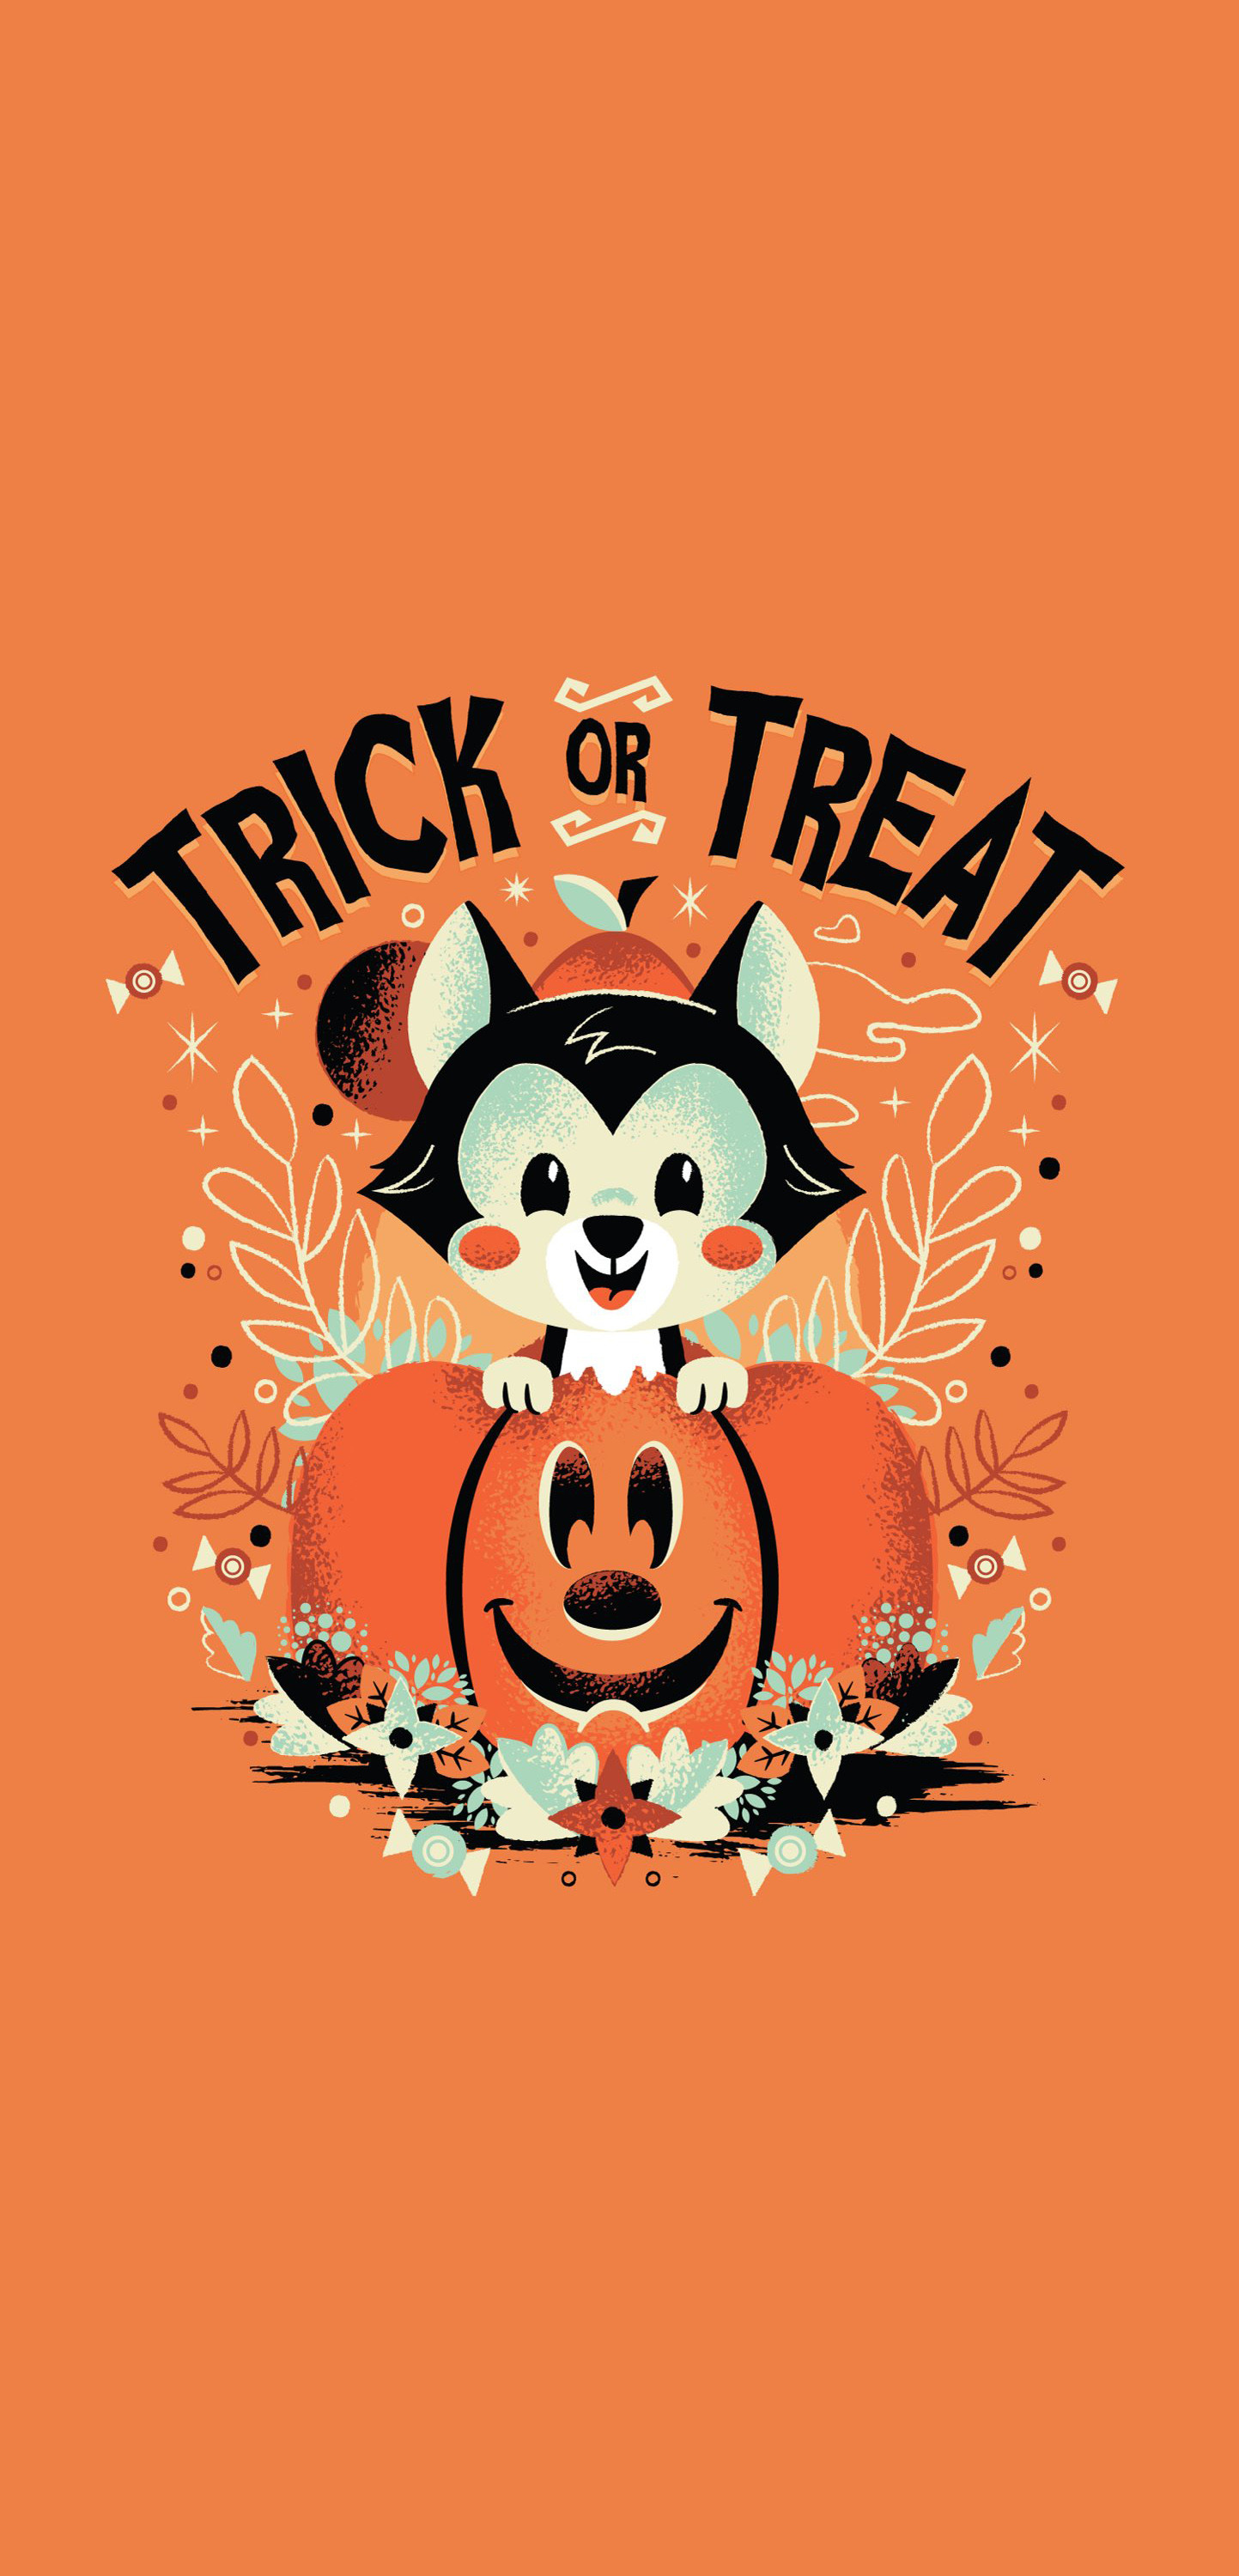 53200 Trick Or Treat Illustrations RoyaltyFree Vector Graphics  Clip  Art  iStock  Trick or treat kids Halloween Trick or treat bag